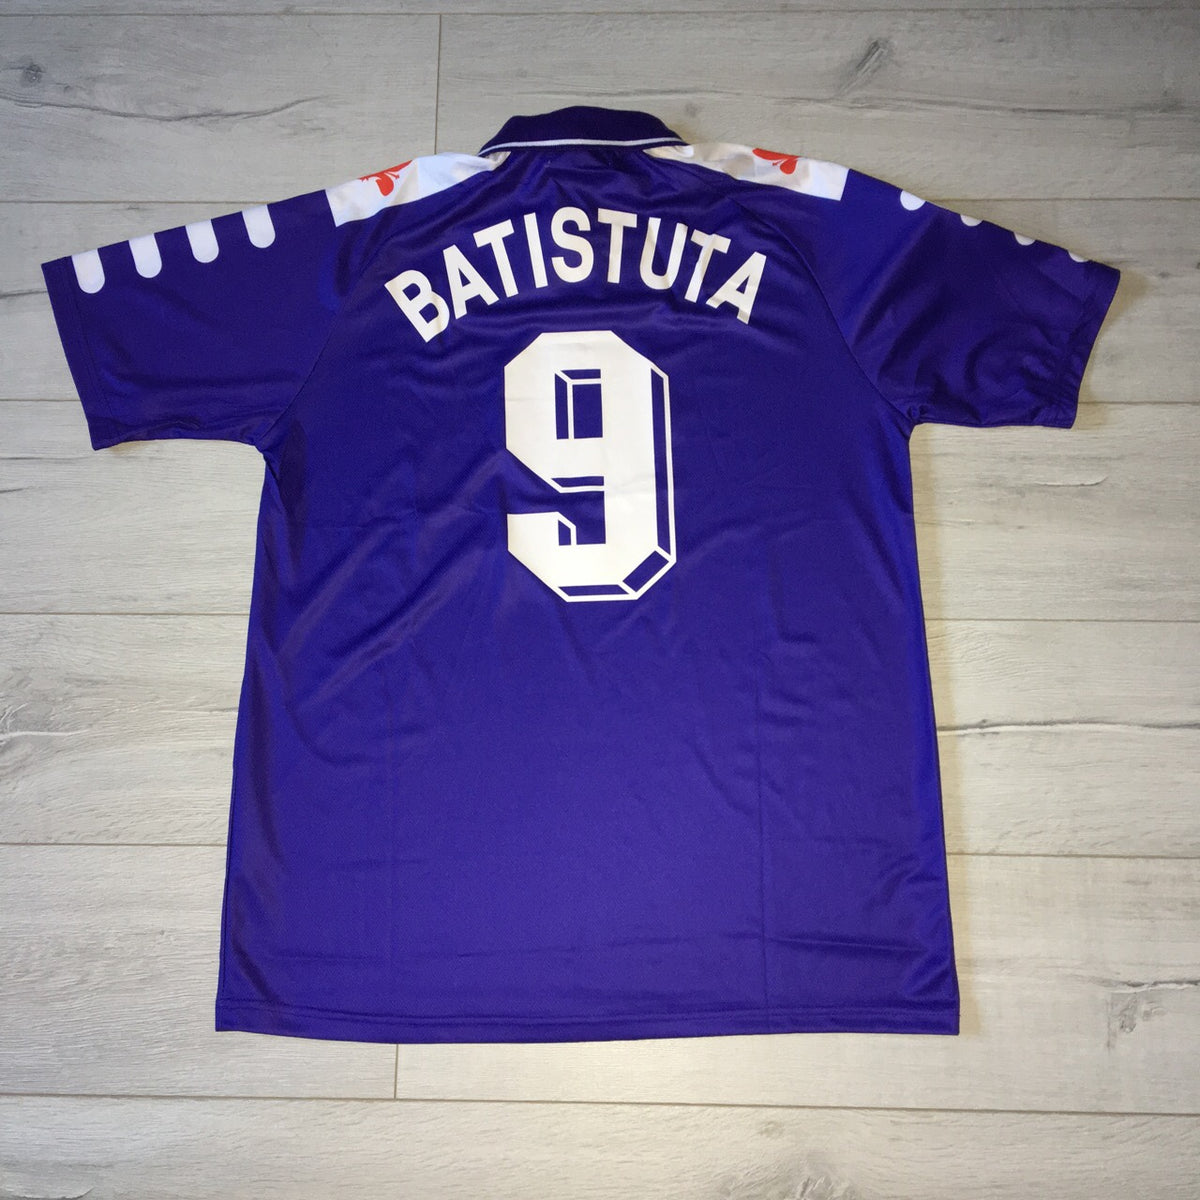 finekeys Retro Fiorentina Away Soccer Football Jersey 1992/1993 Men Adult Batistuta #9 M / Batistuta #9